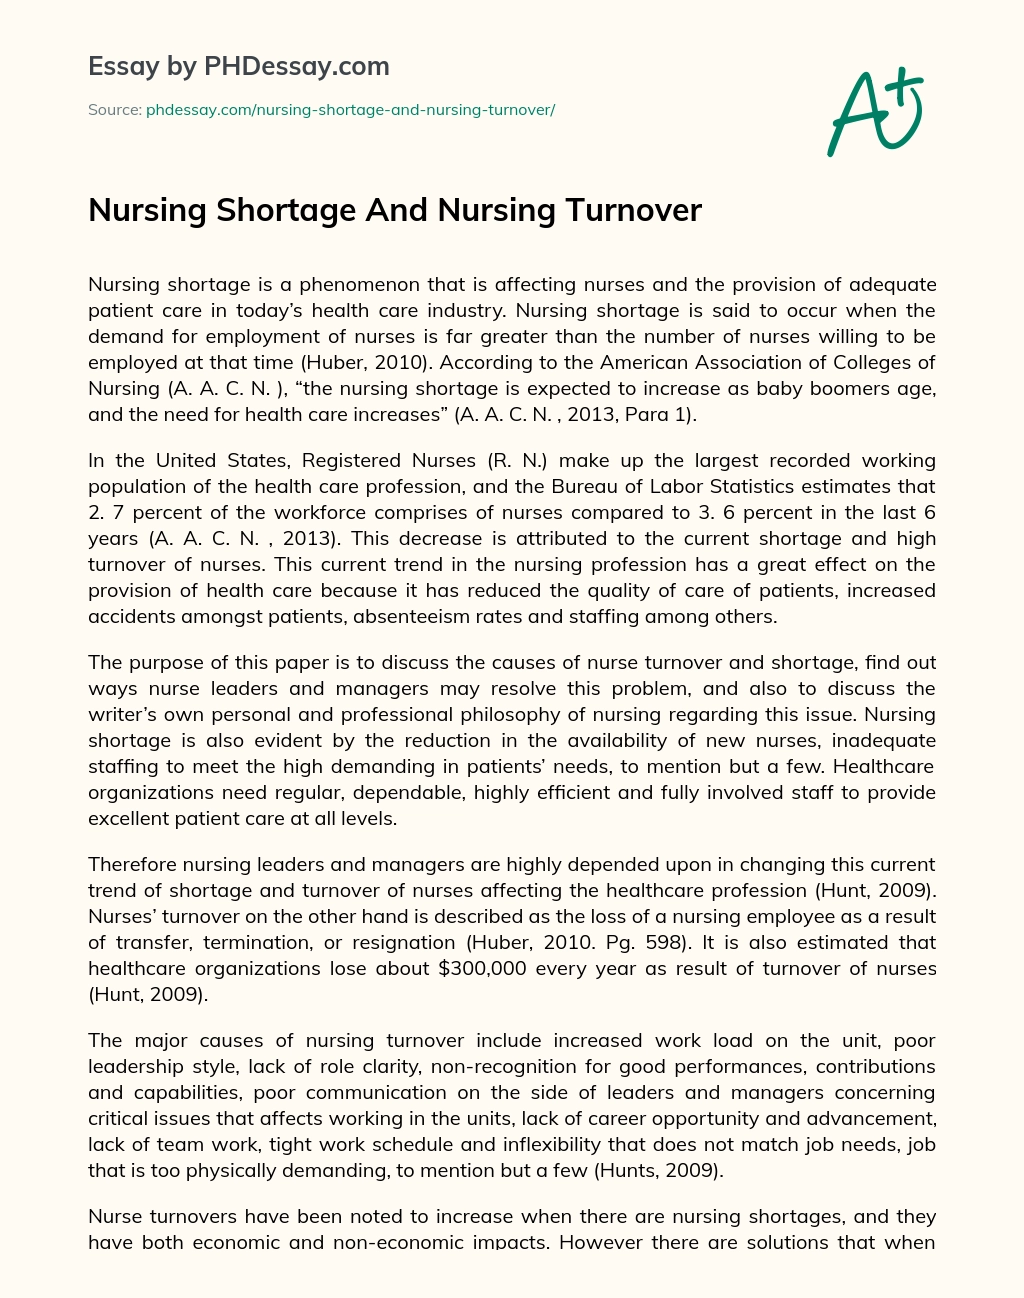 Nursing Shortage And Nursing Turnover essay